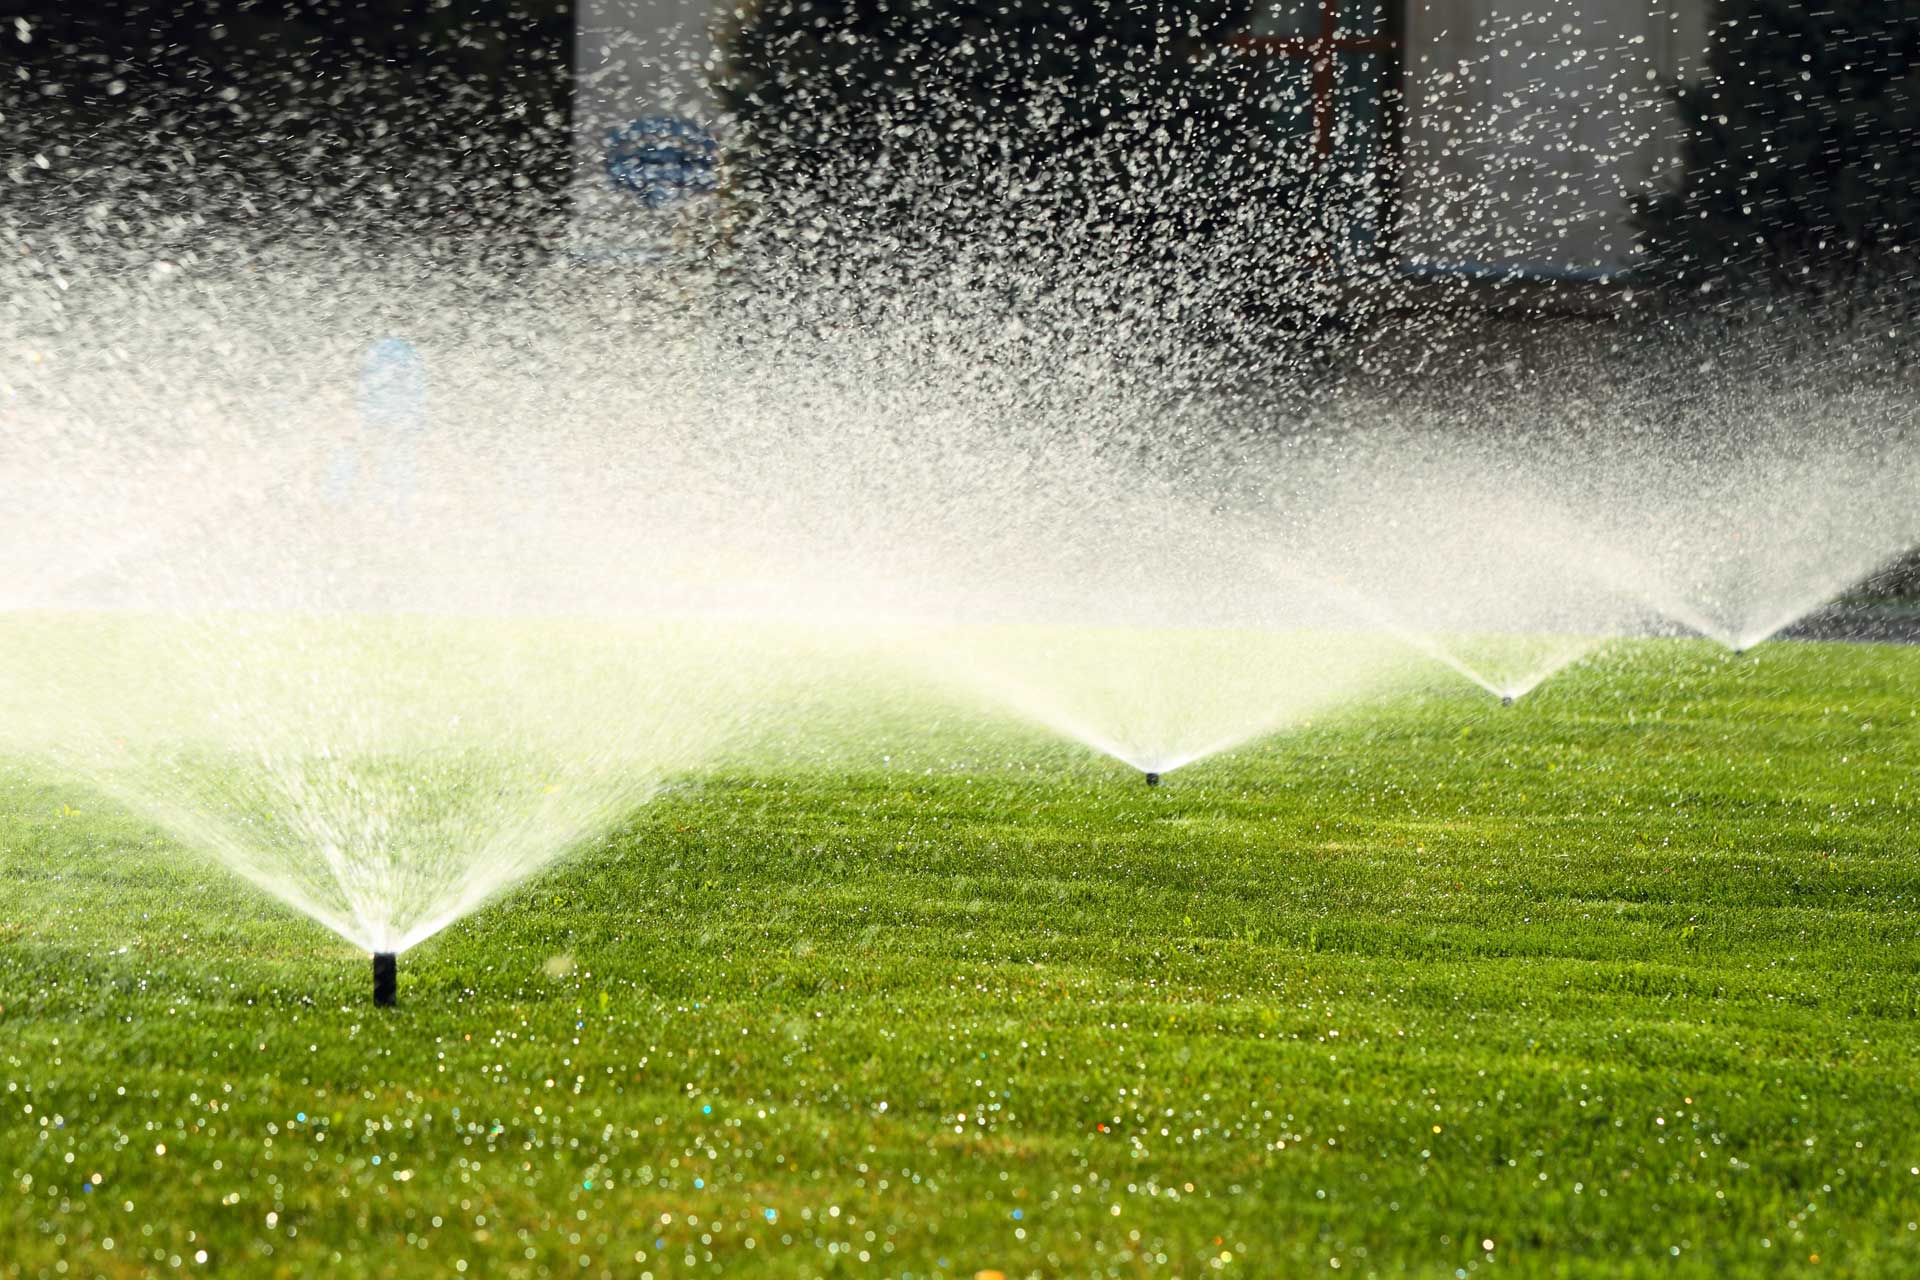 Deciphering Your Irrigation Controller – Monterey